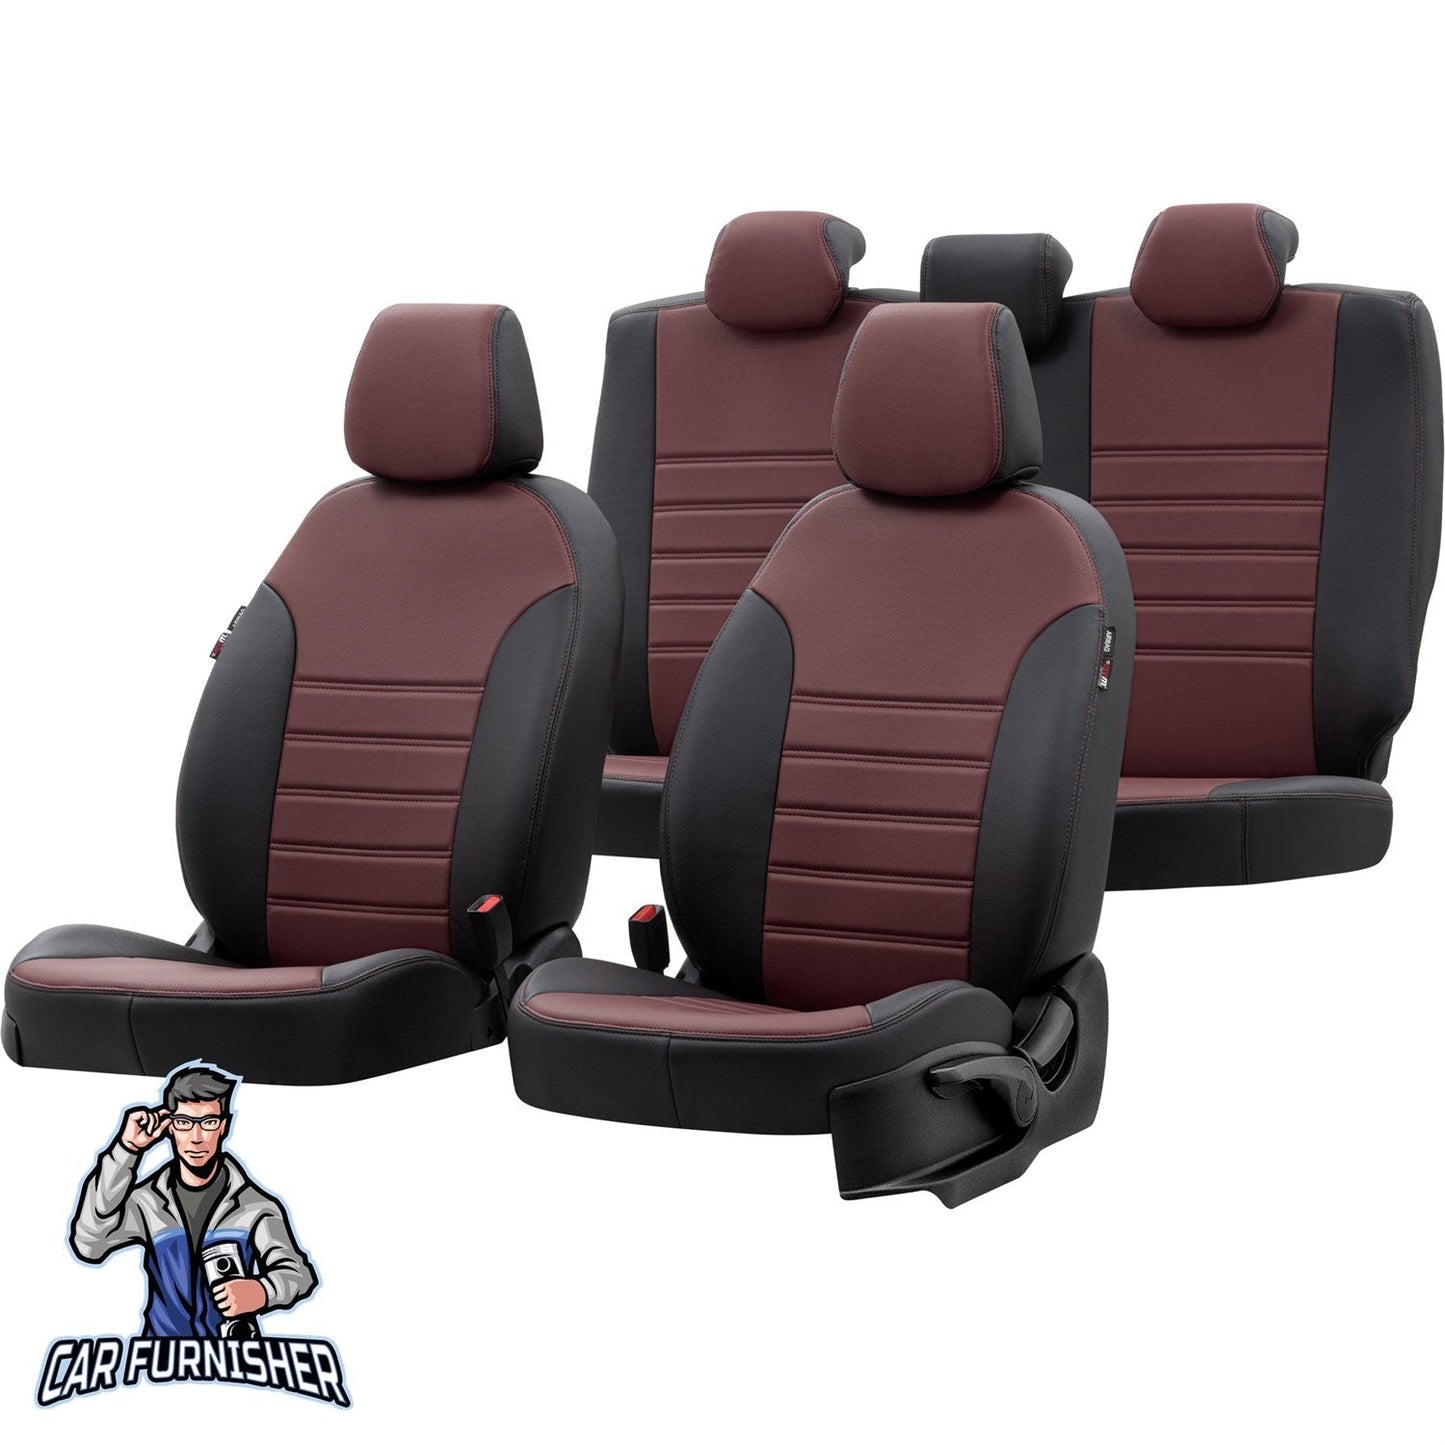 Dacia Sandero Seat Covers Istanbul Leather Design Burgundy Leather